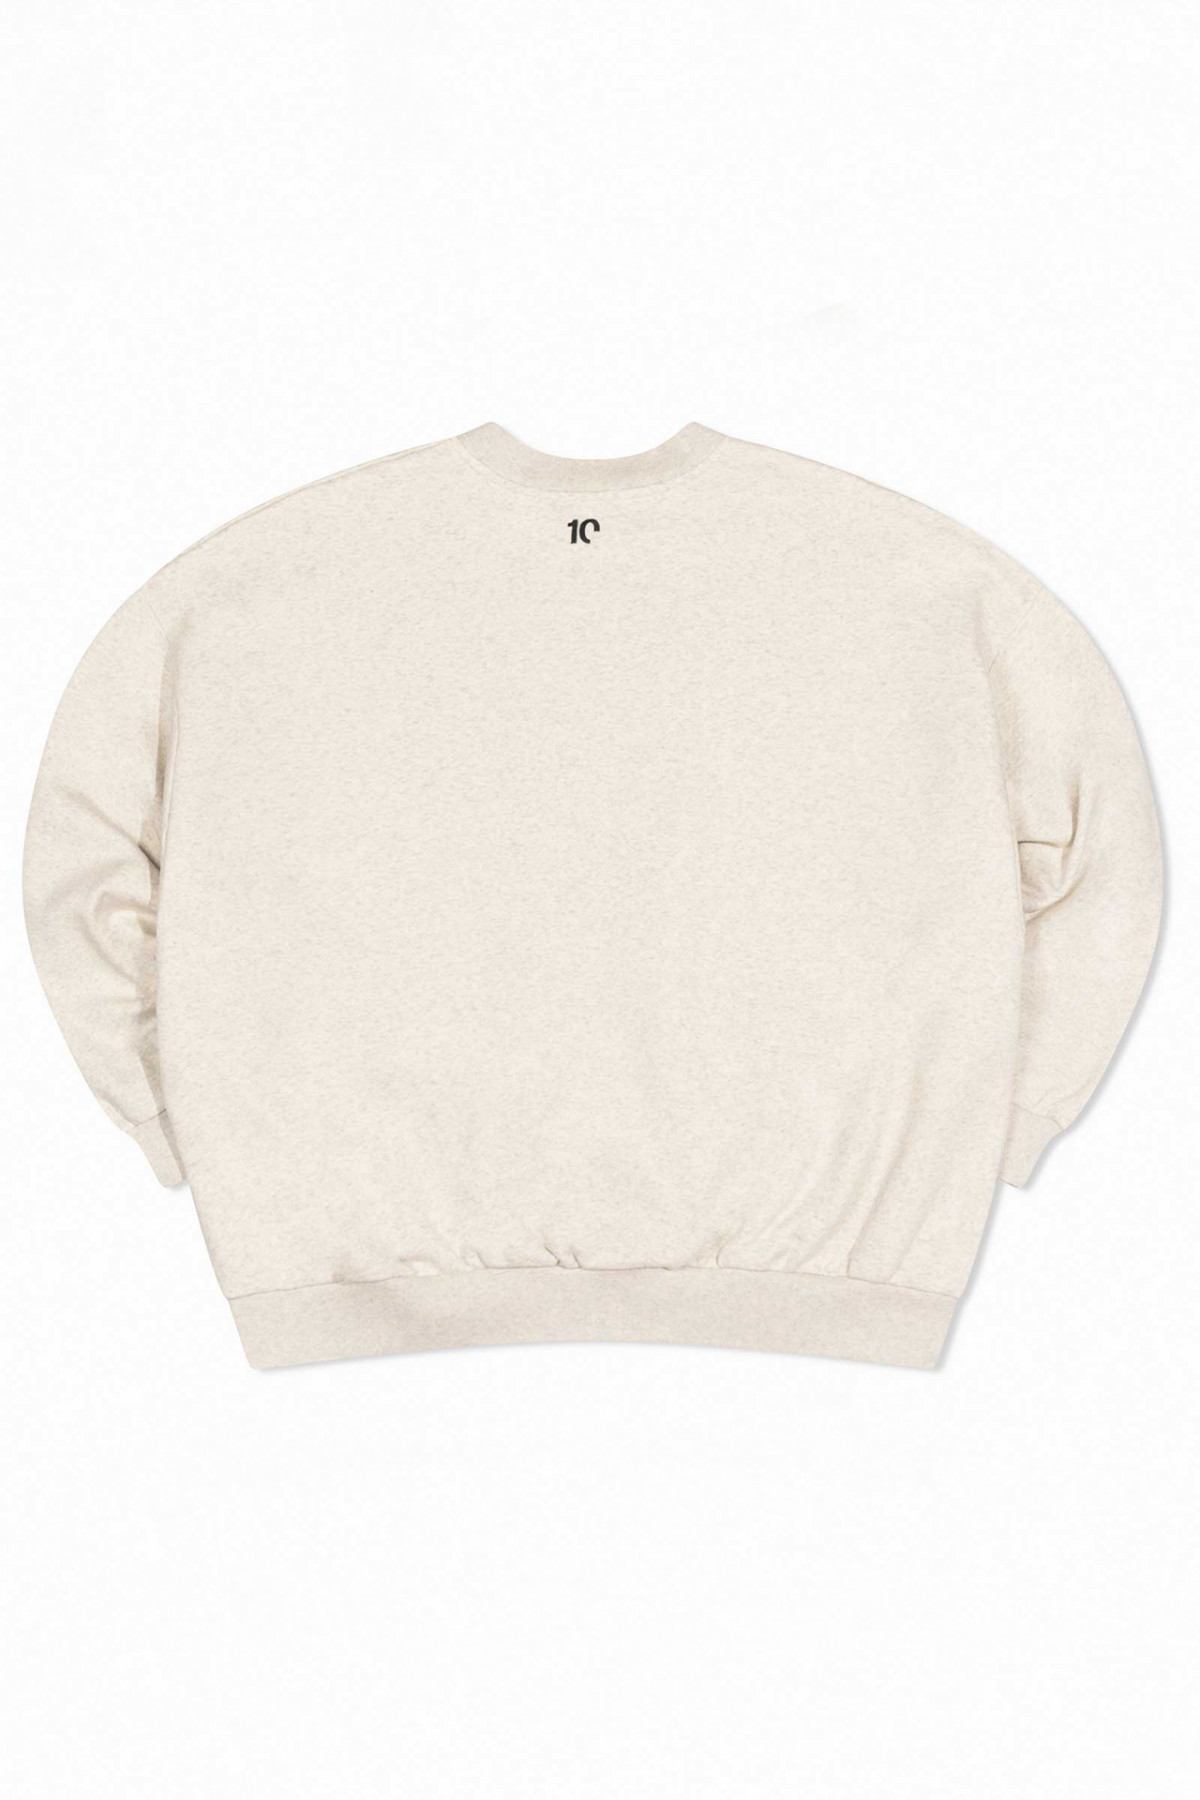 Blake fleece sweater 30 802 2201